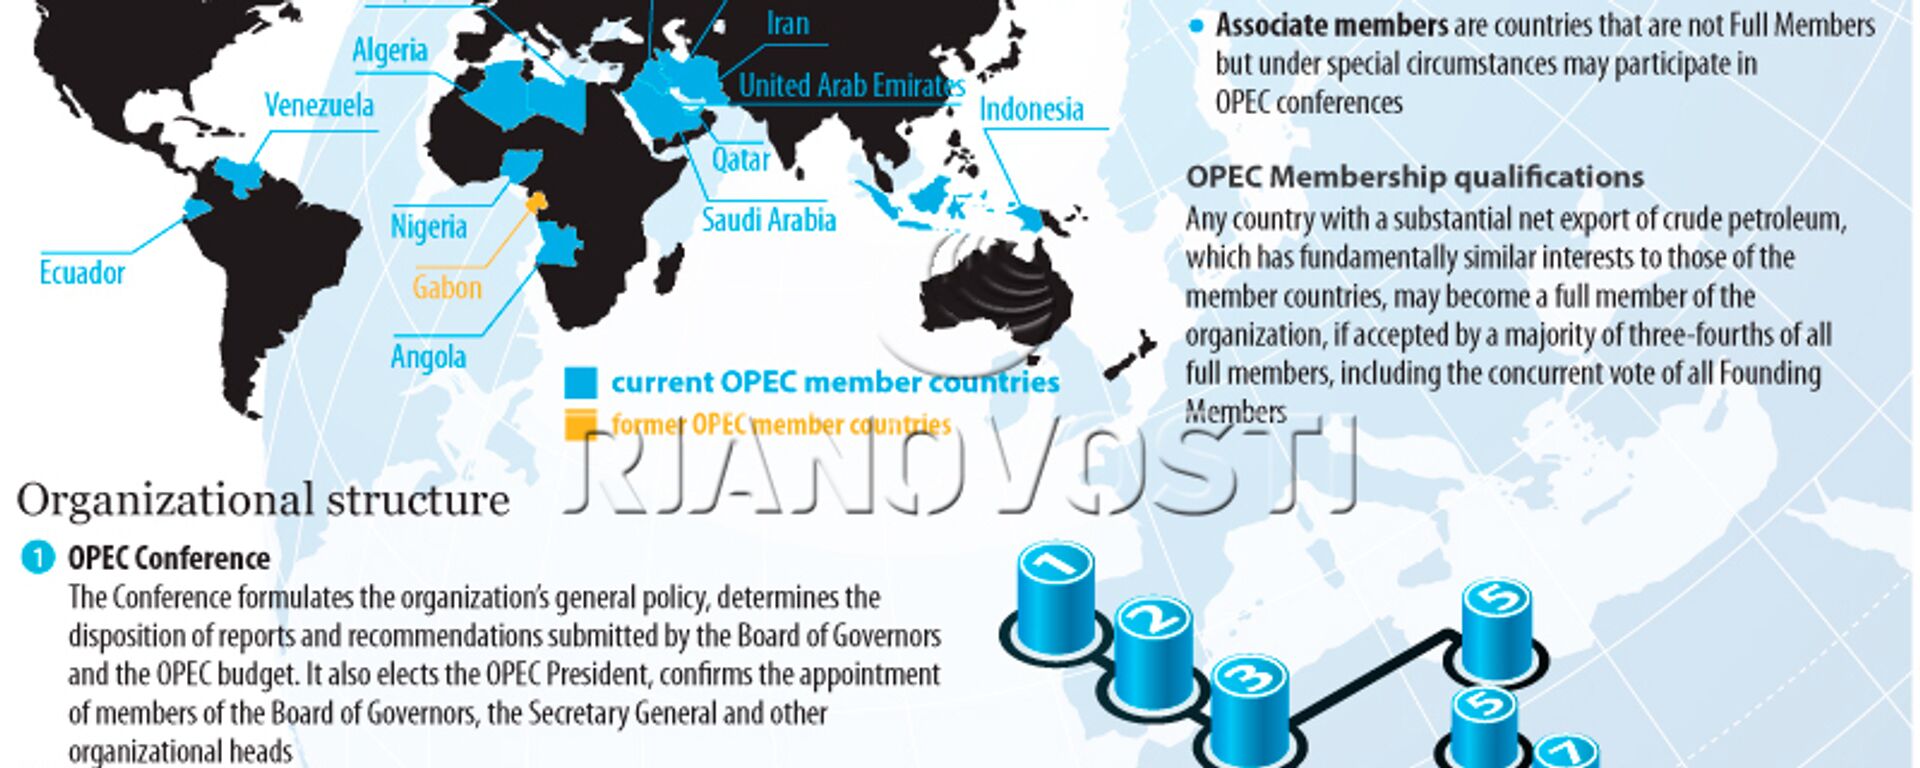 OPEC: history, structure, functions - Sputnik International, 1920, 17.03.2010